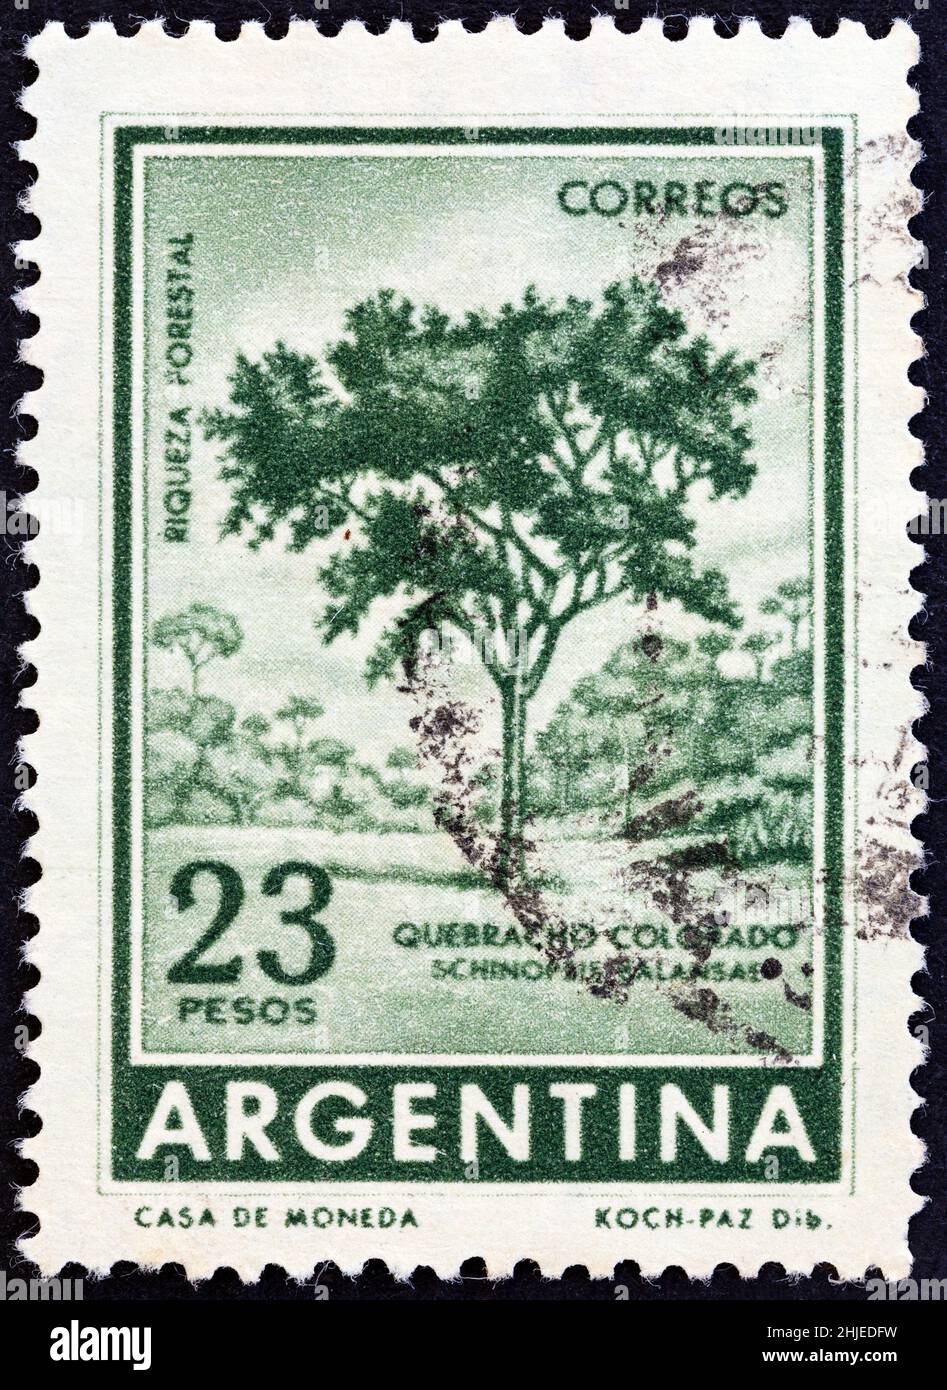 ARGENTINA - CIRCA 1965: A stamp printed in Argentina shows Quebracho colorado tree (Schinopsis balansae), circa 1965. Stock Photo